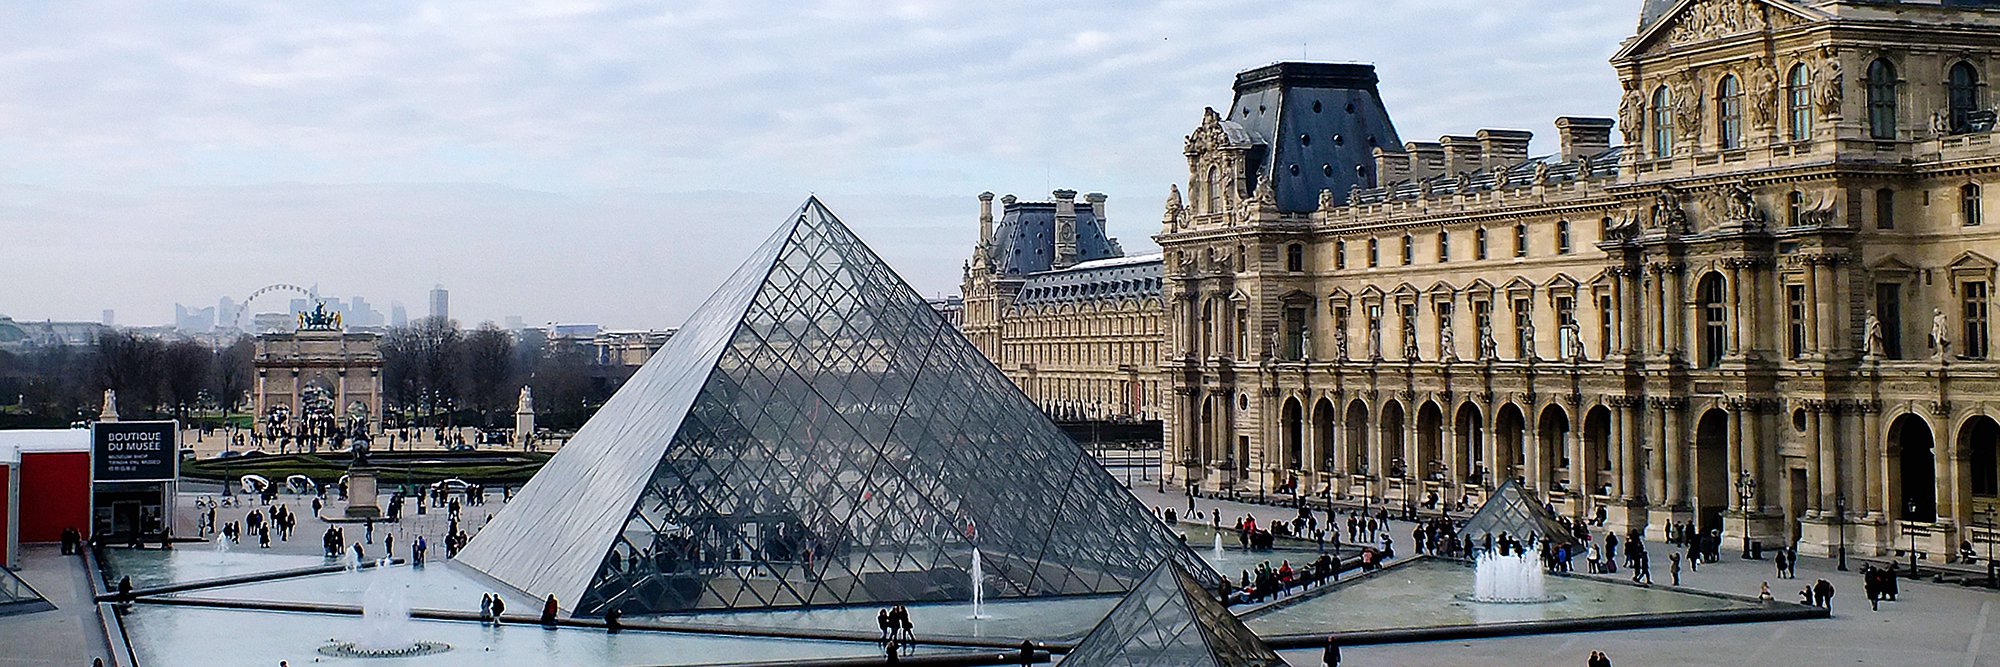 glass structure beside brown building, Louvre Pyramid, Paris, France